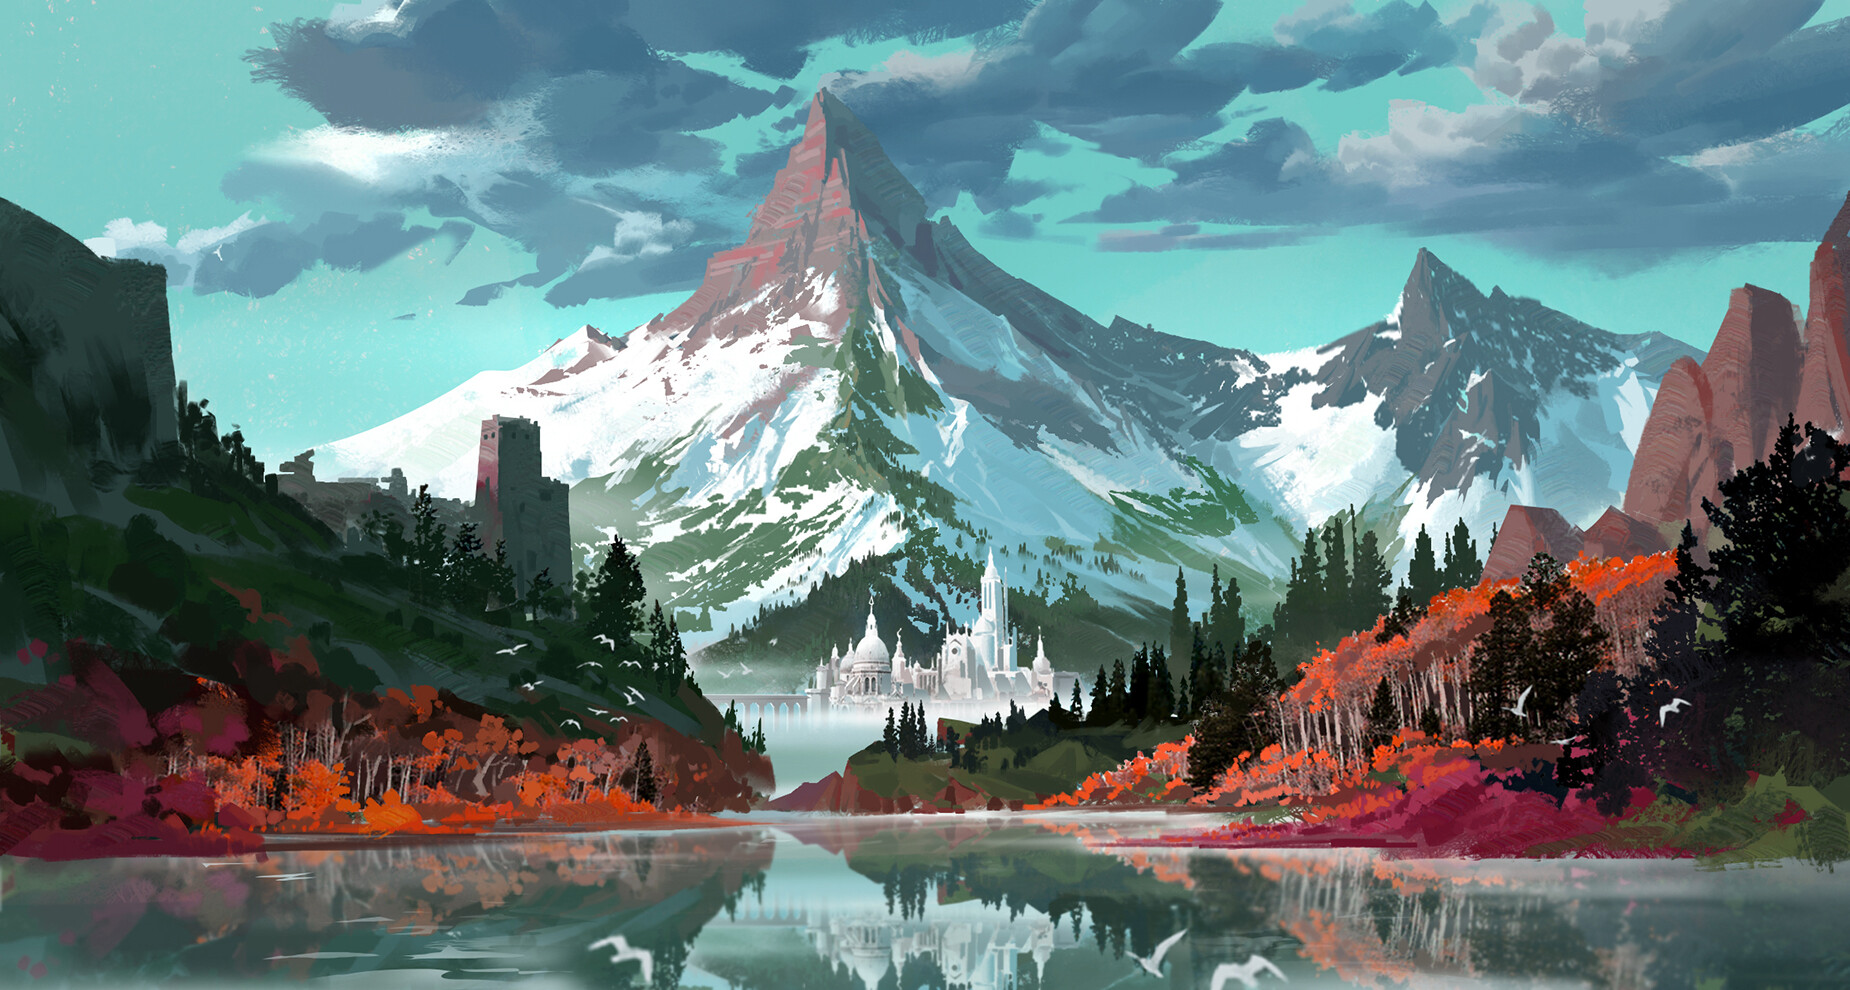 General 1850x990 MH C digital art fantasy art mountains forest snow castle lake